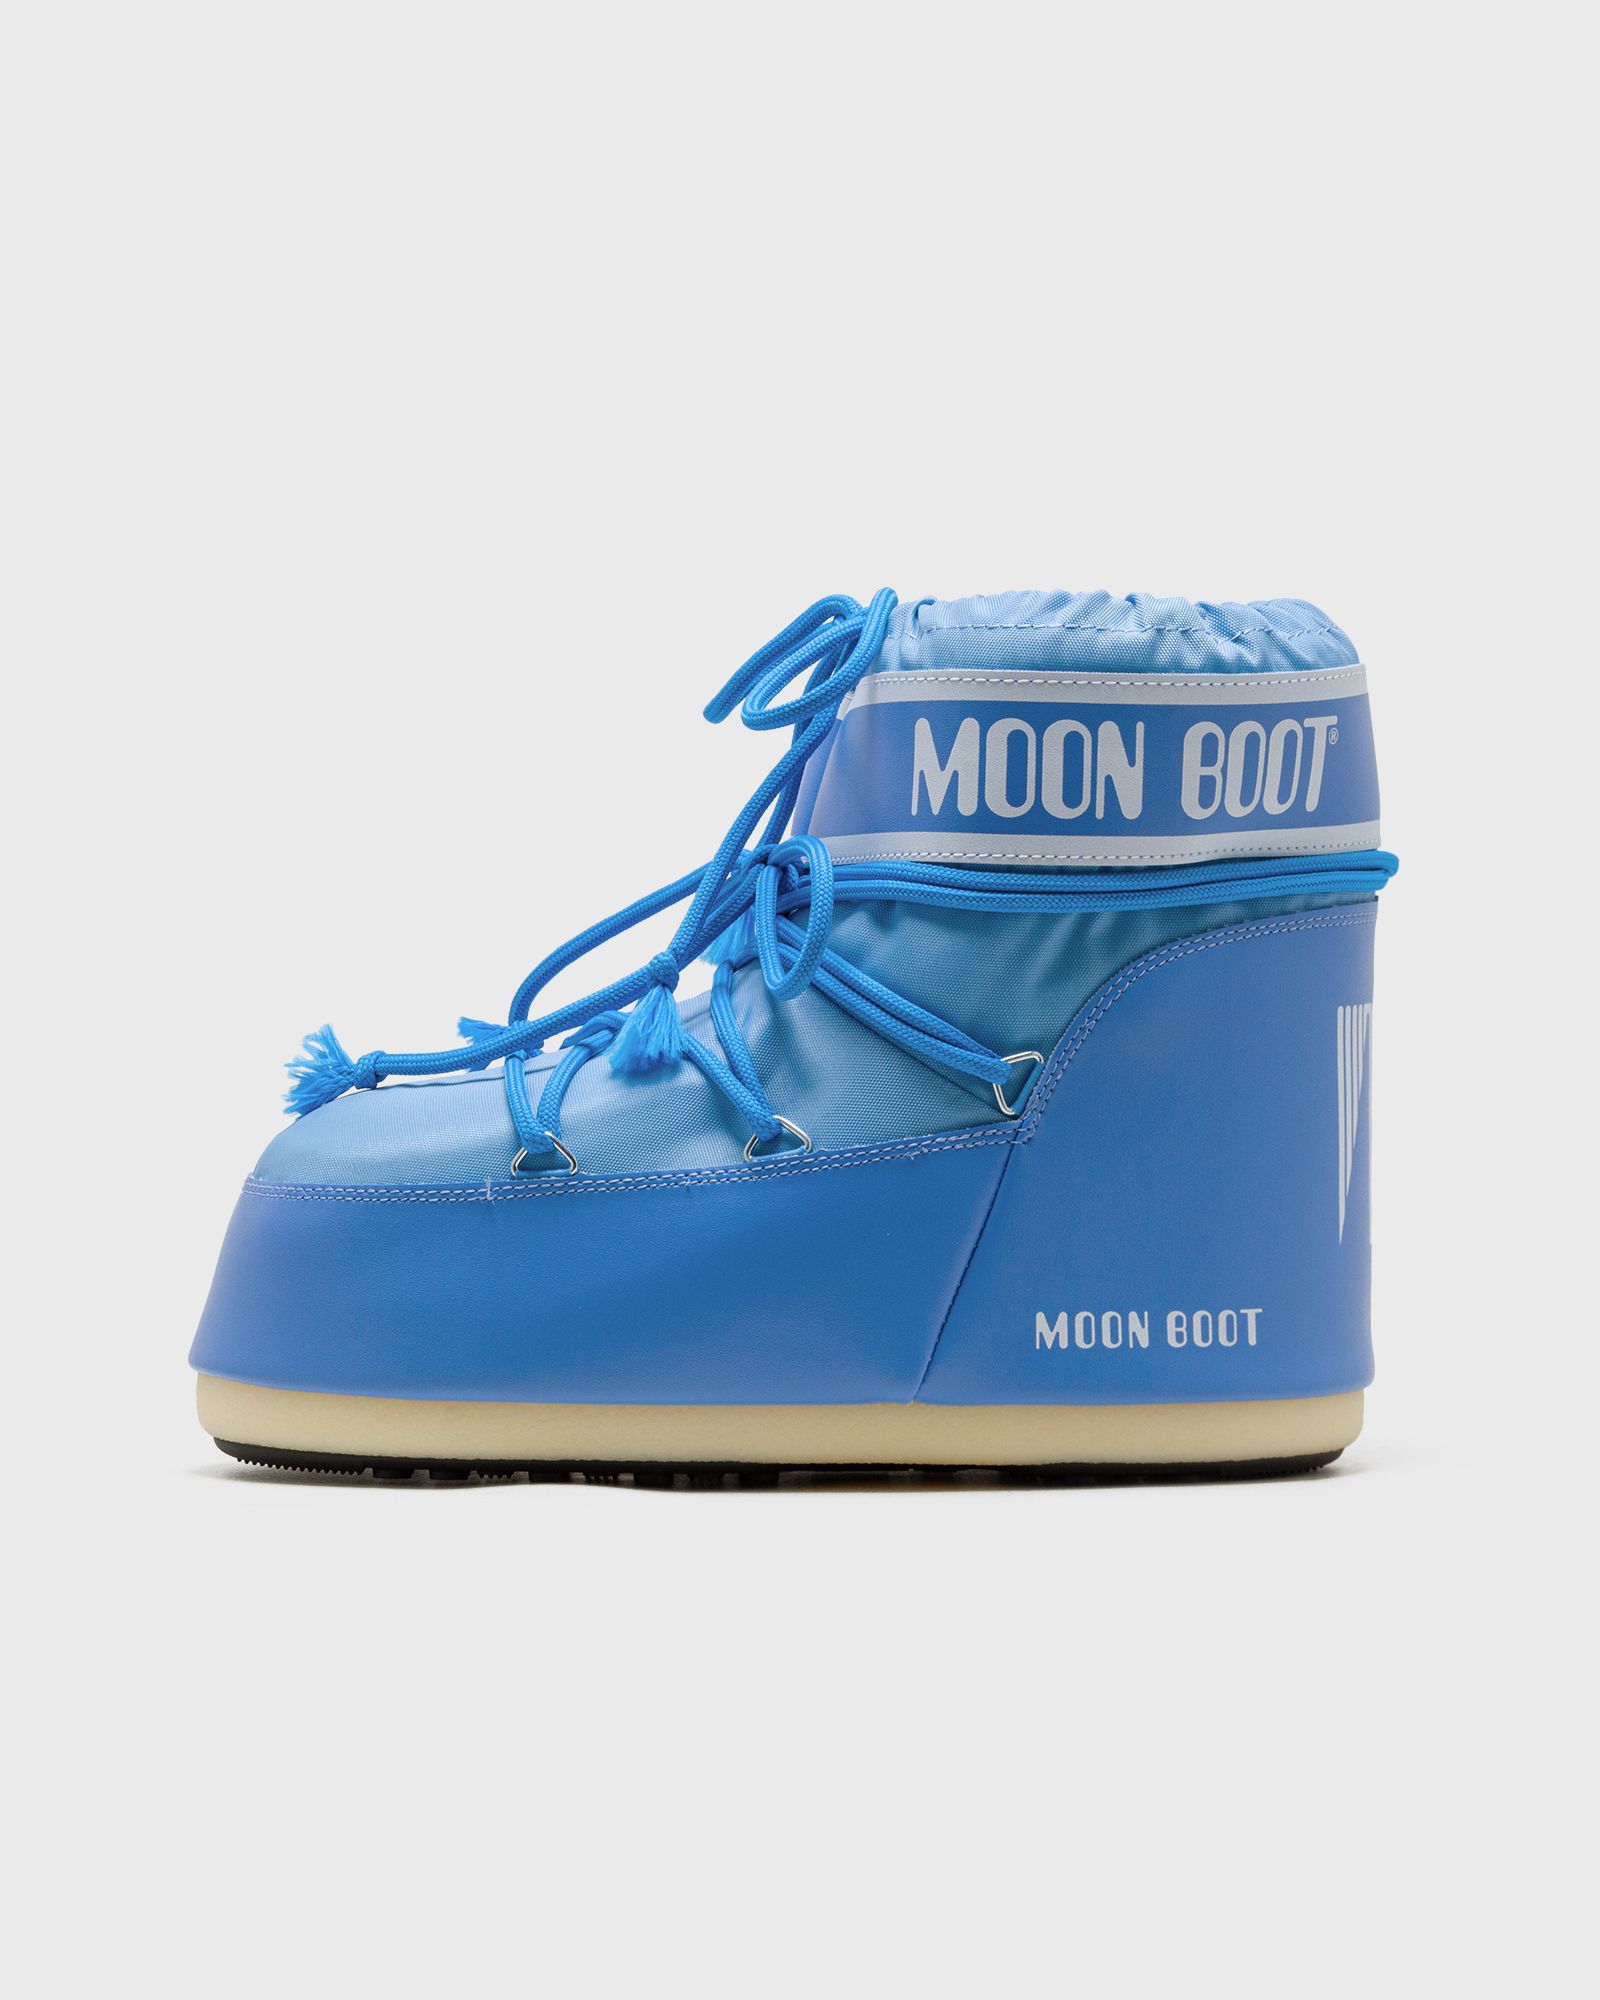 Moon Boot - icon low nylon men boots blue in größe:42-44